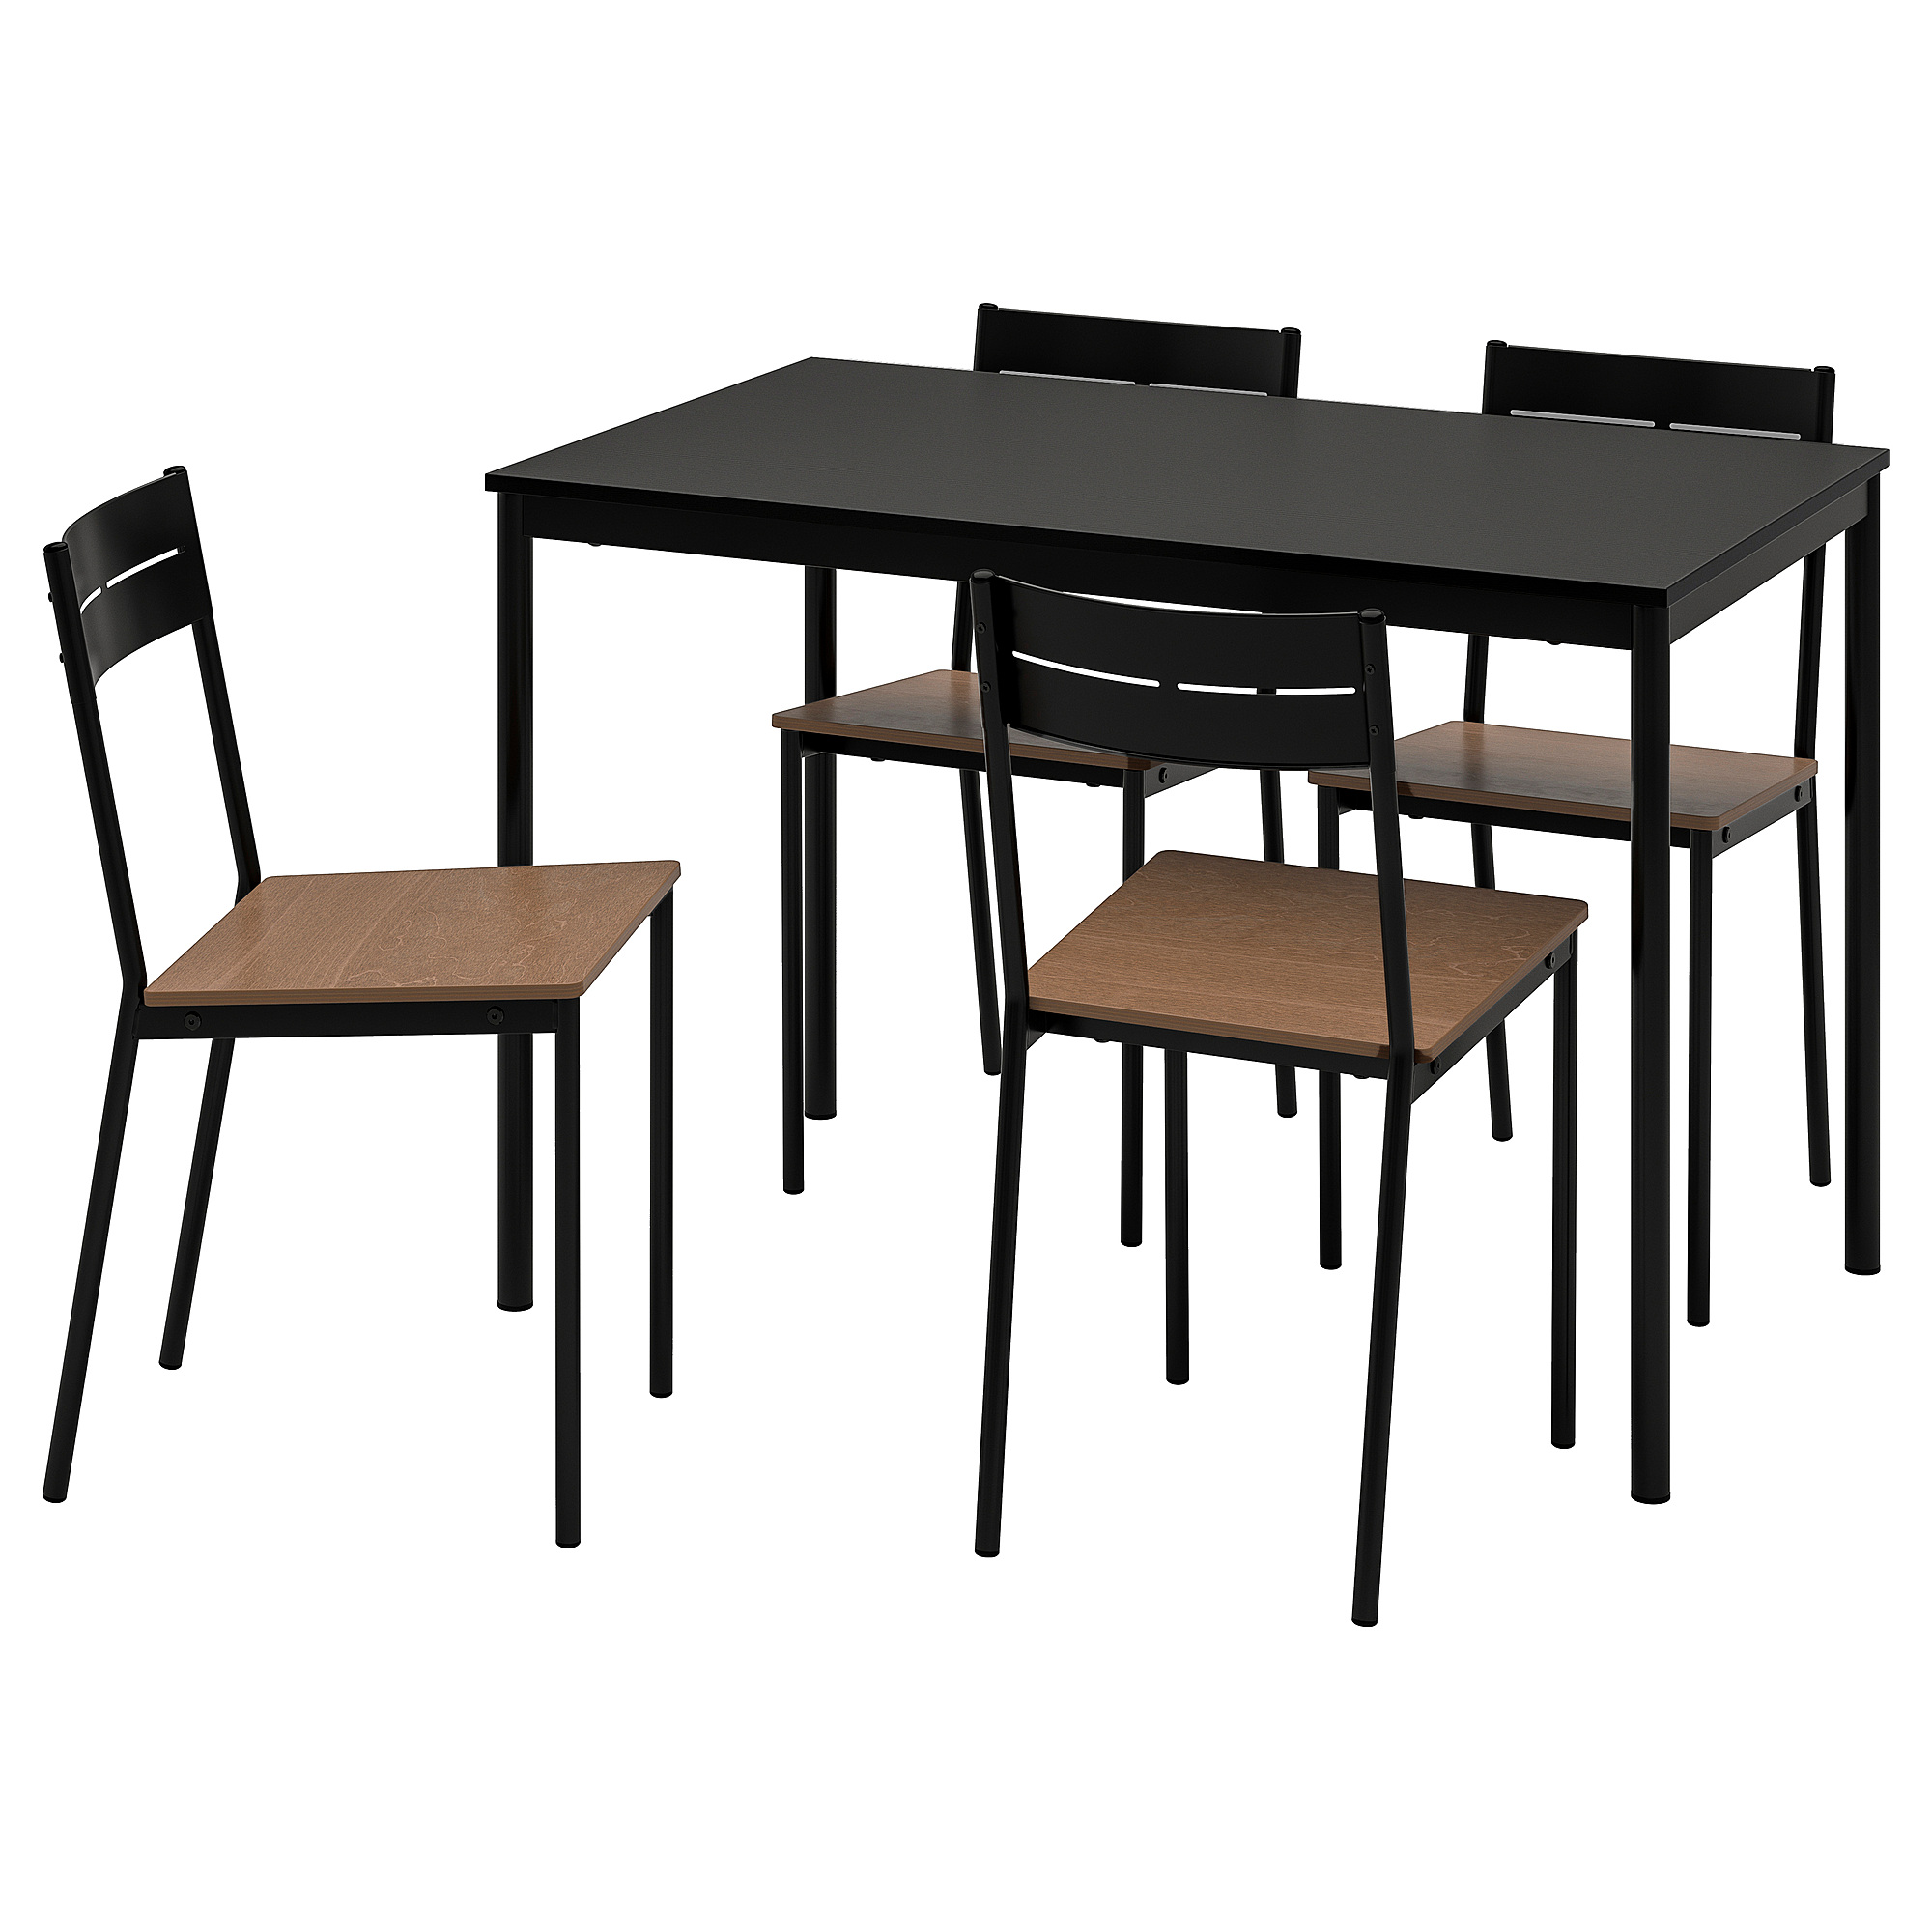 SANDSBERG/SANDSBERG table and 4 chairs